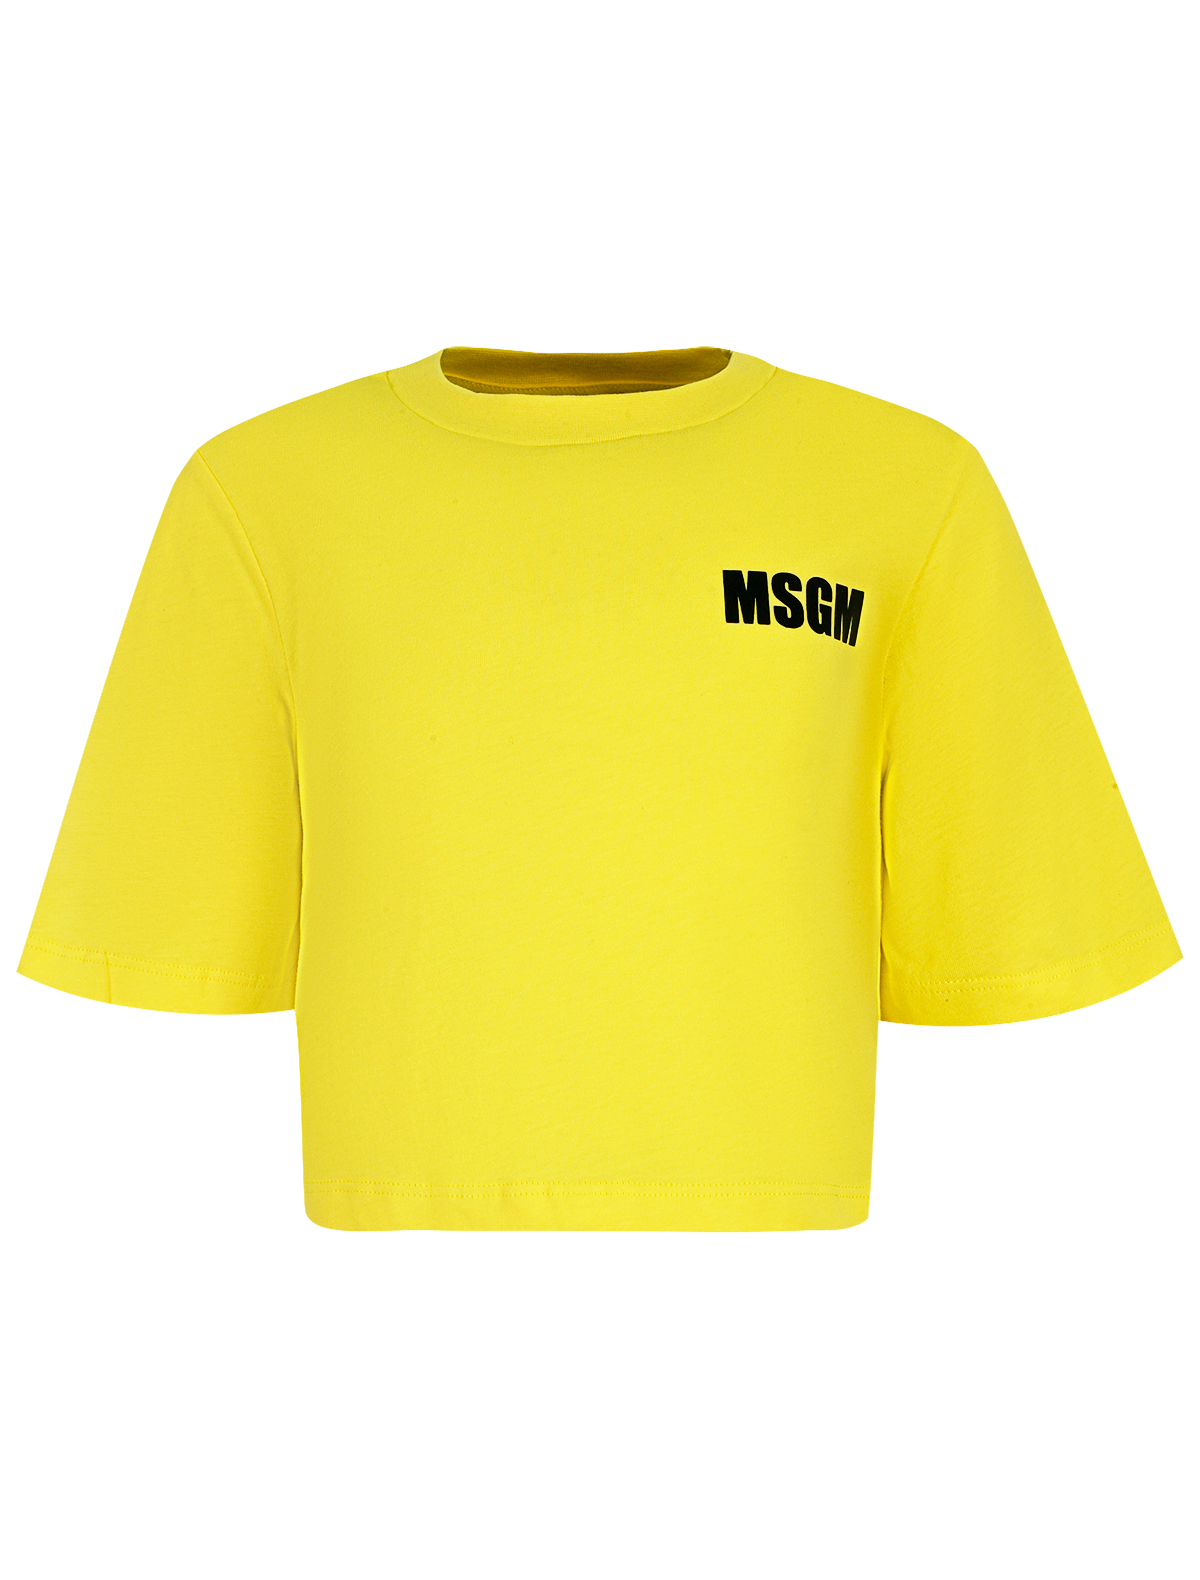 Футболка MSGM 2648359, цвет желтый, размер 9 1134509412688 - фото 1